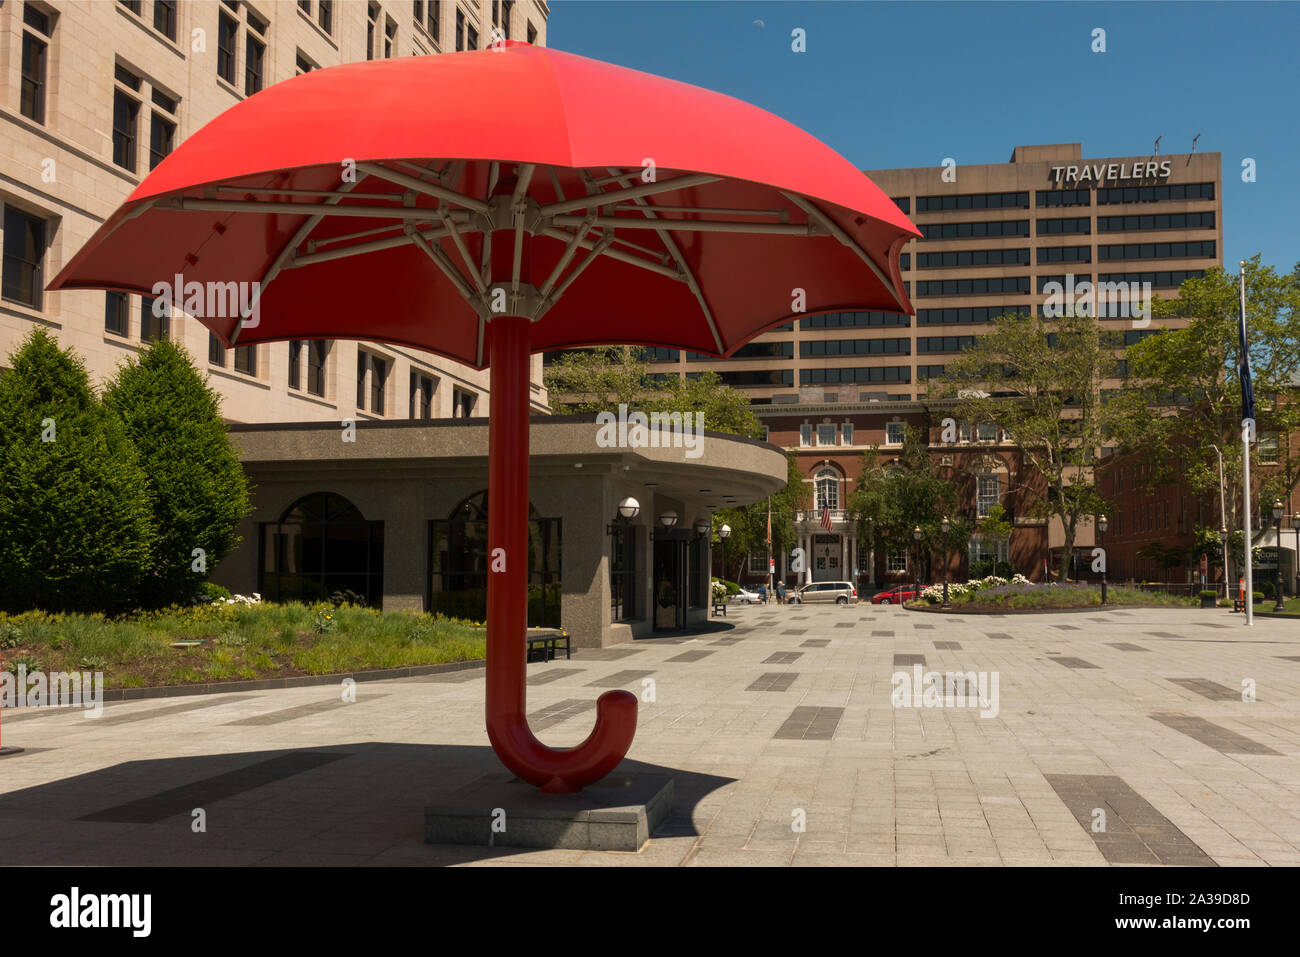 Escultura paraguas fotografías e imágenes de alta resolución - Alamy